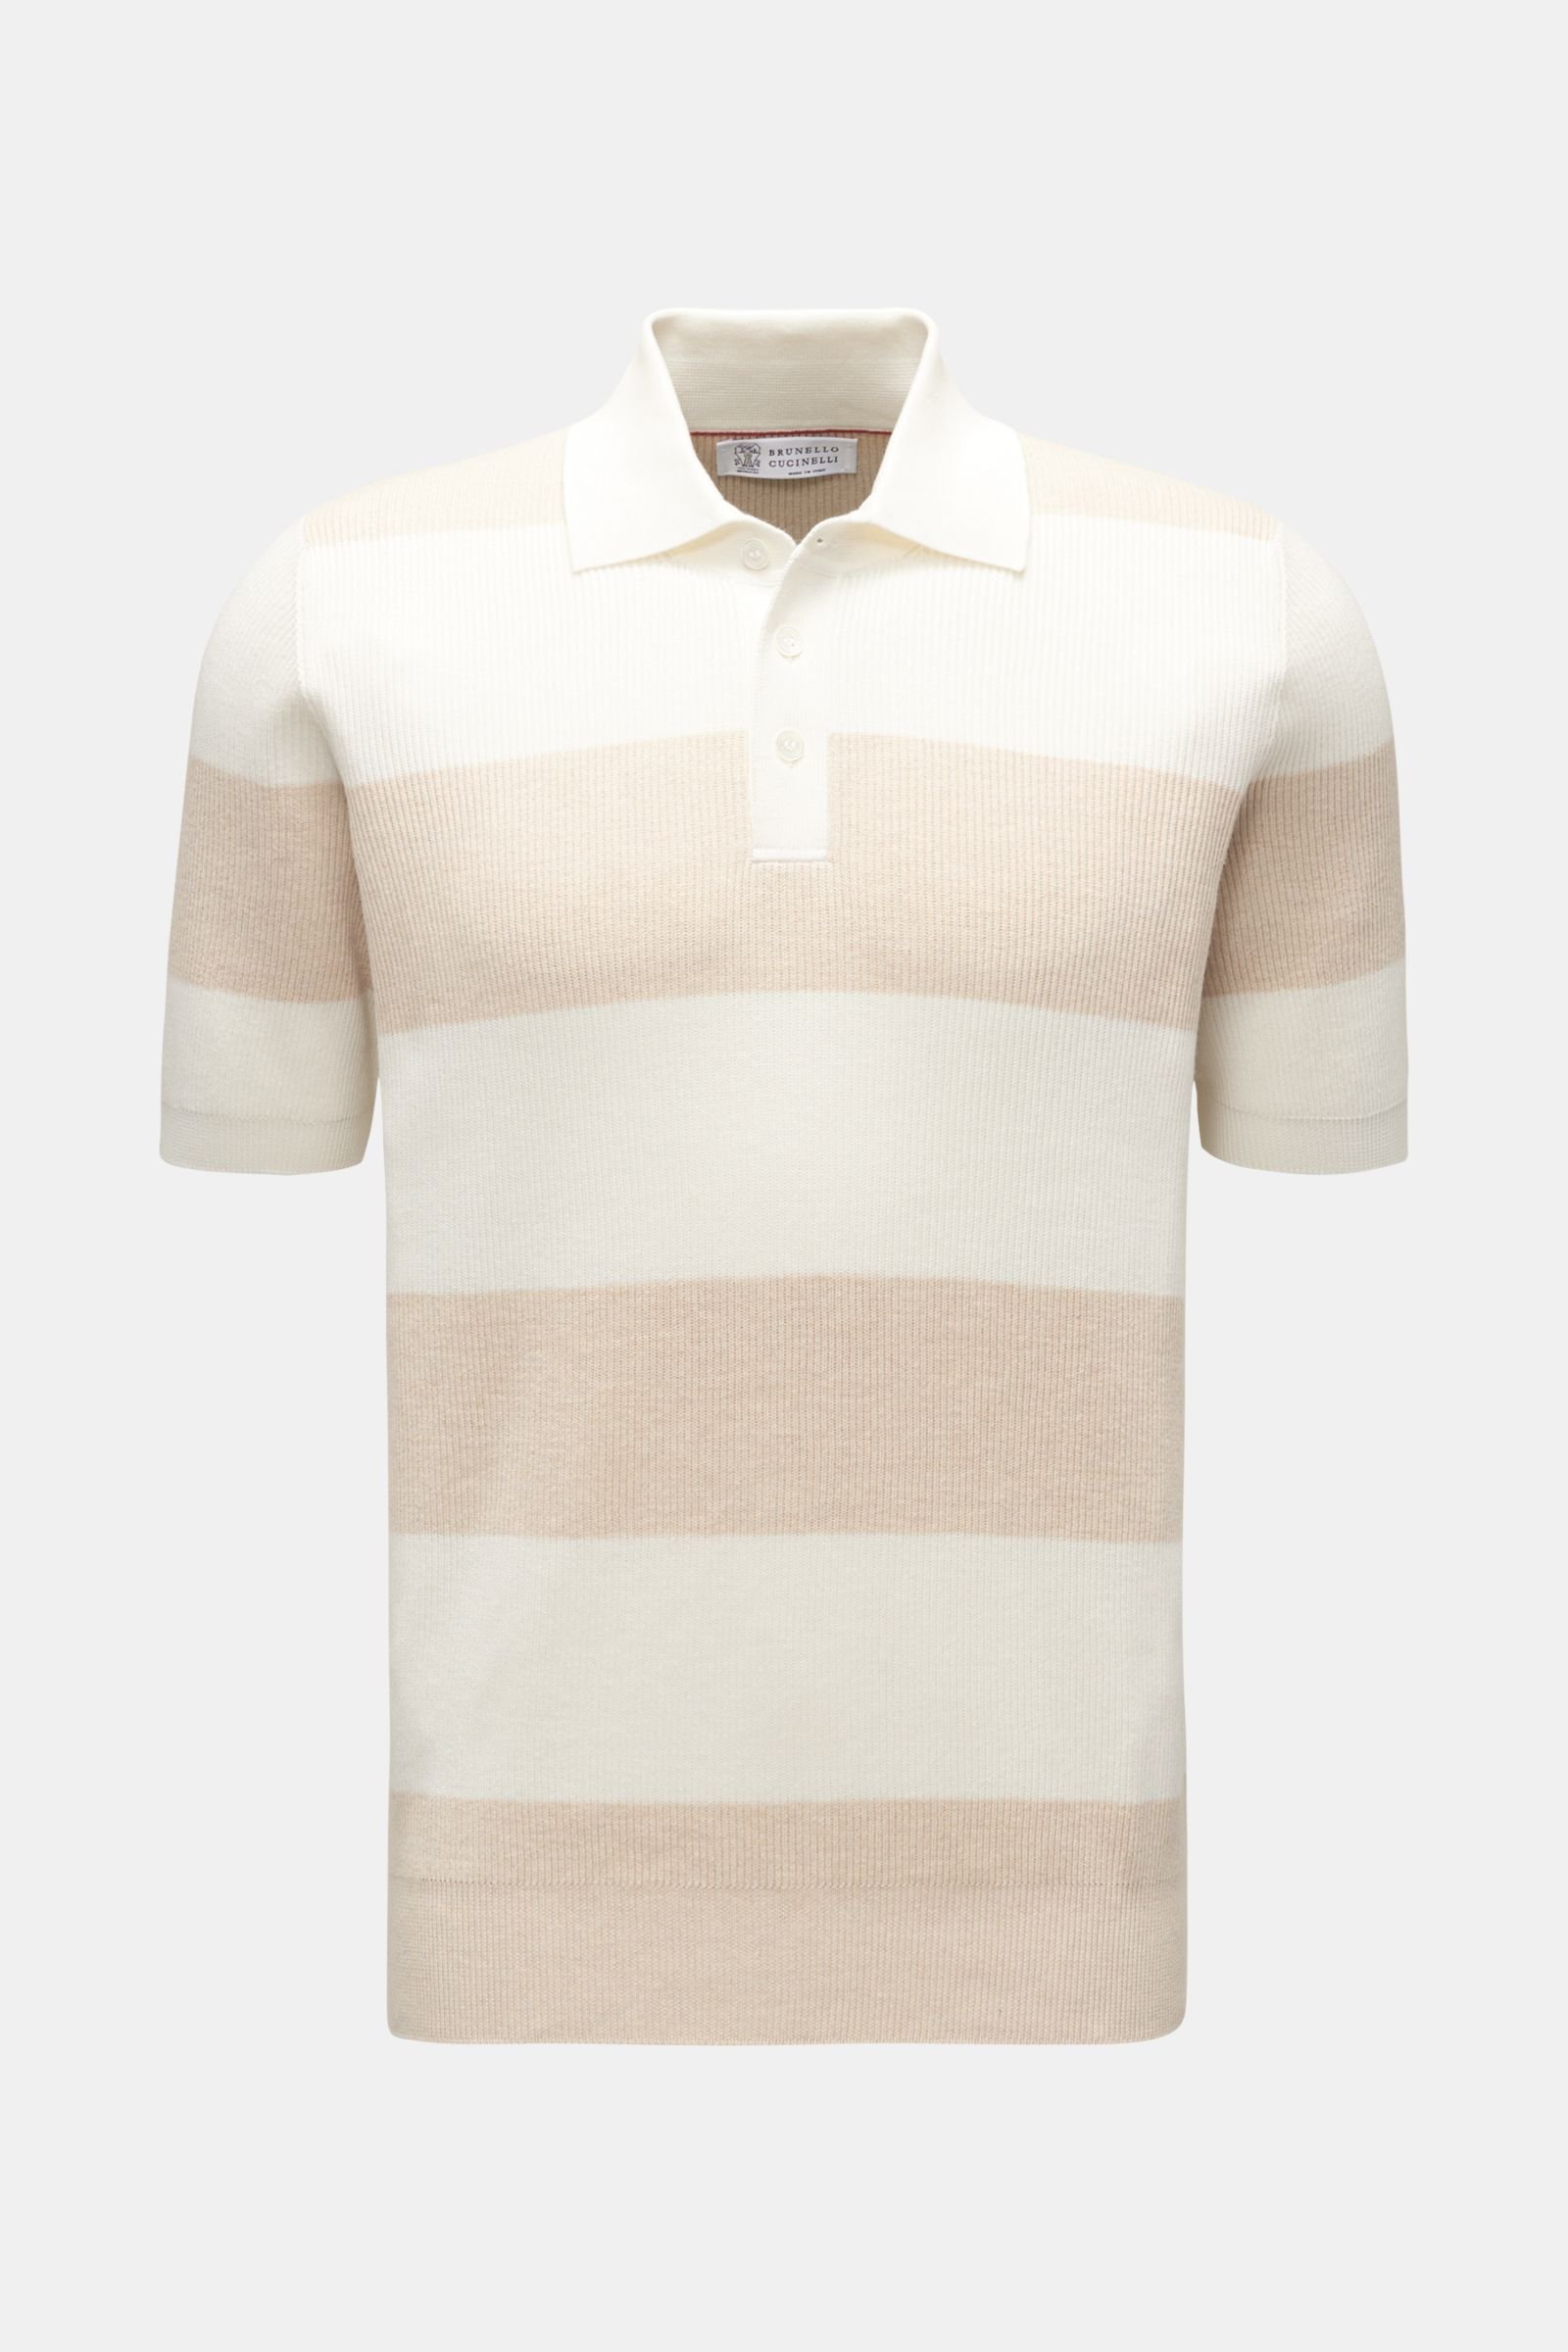 Short sleeve knit polo beige/cream striped 